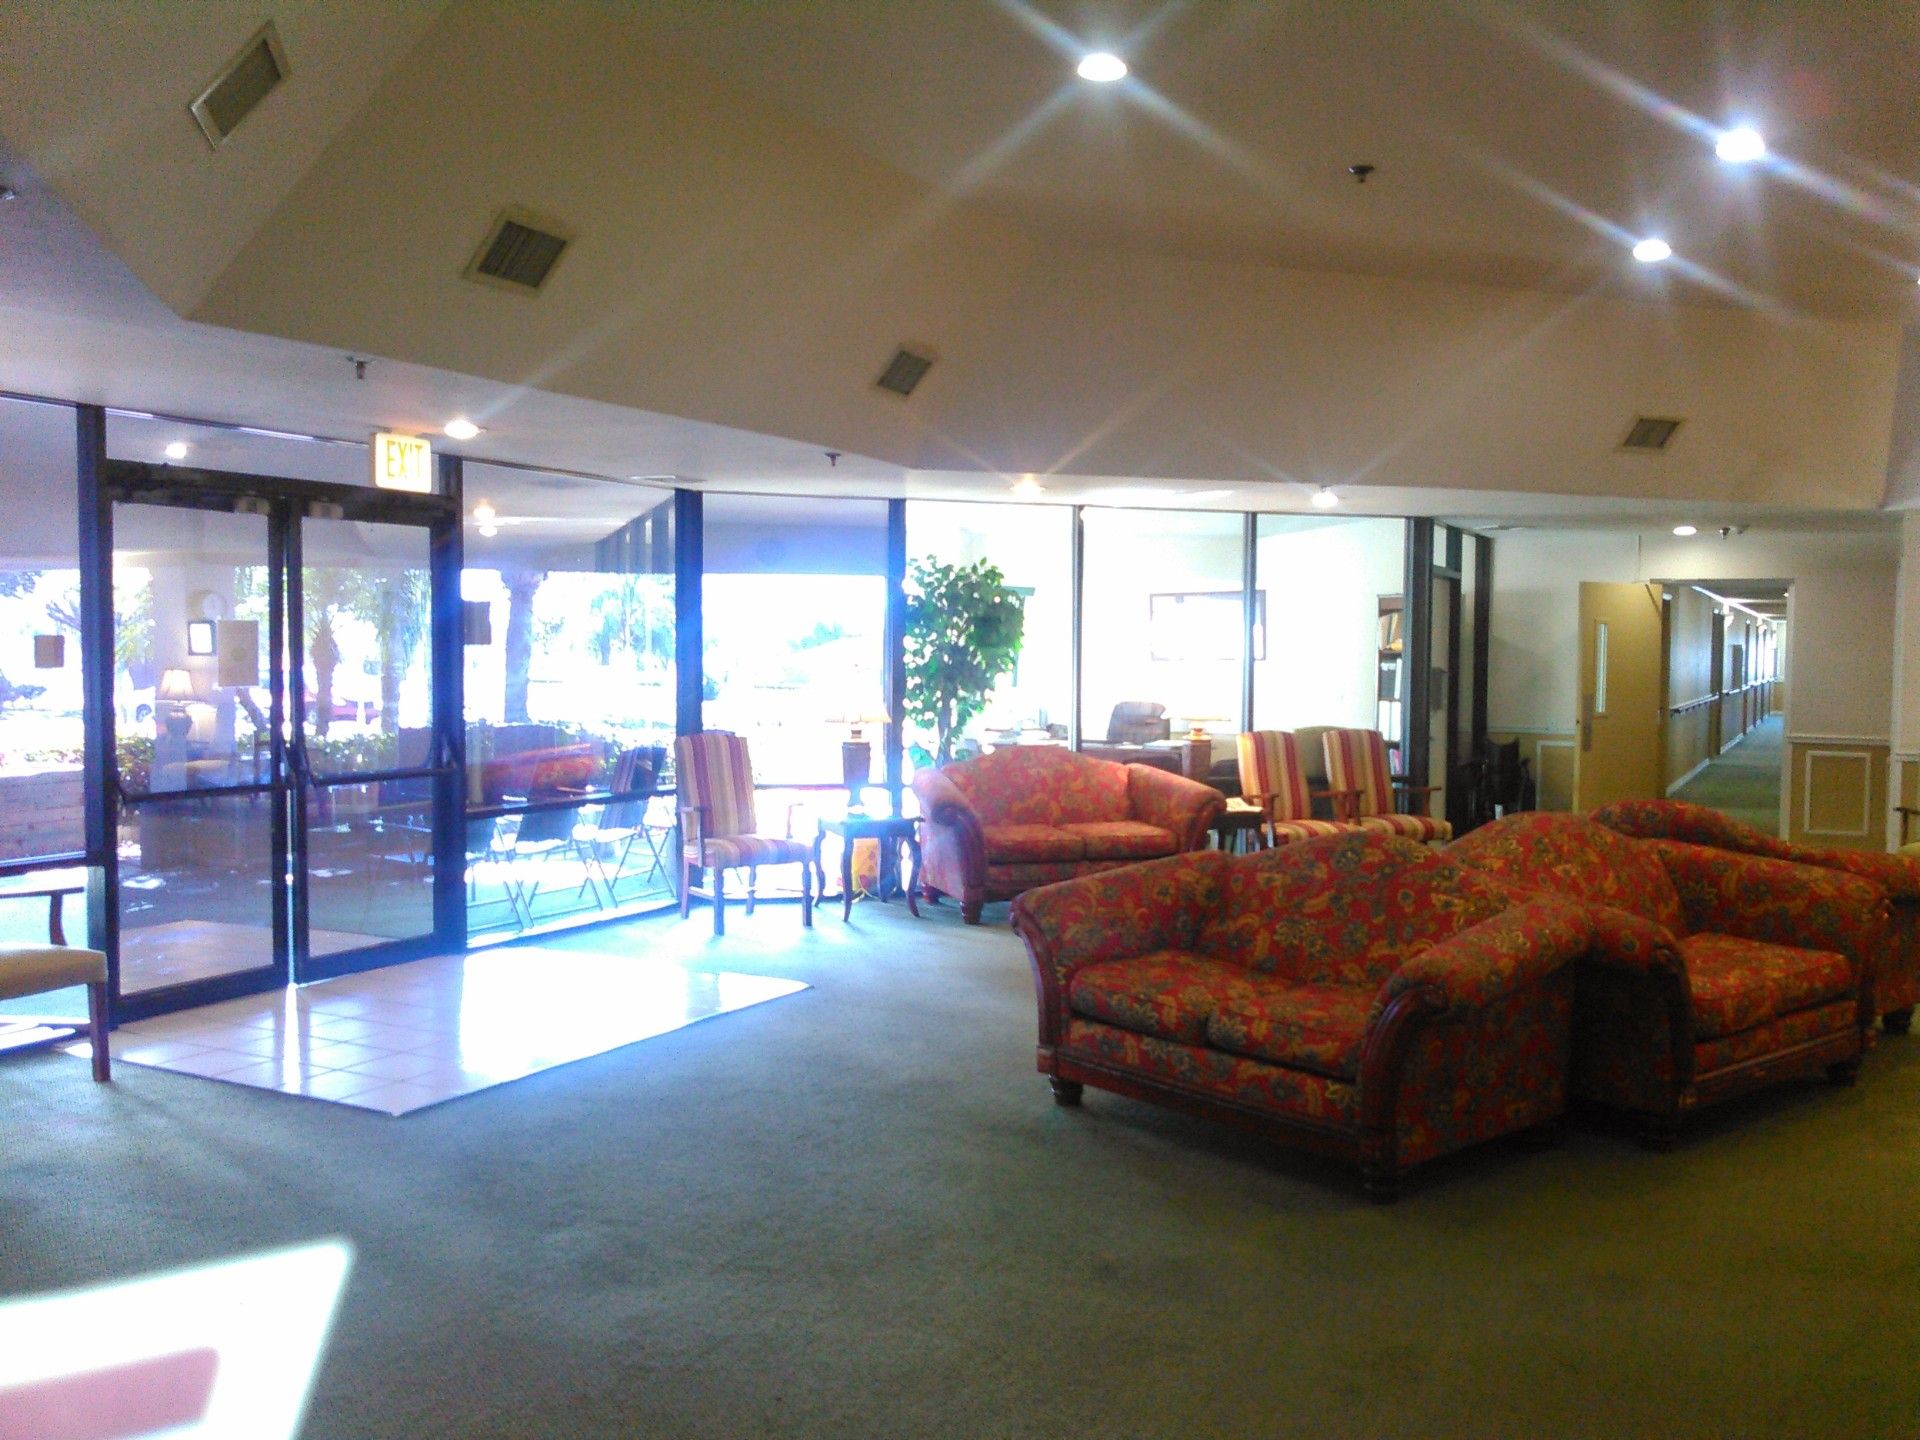 Interior view of Sunny Hills of Sebring senior living community showcasing modern architecture.